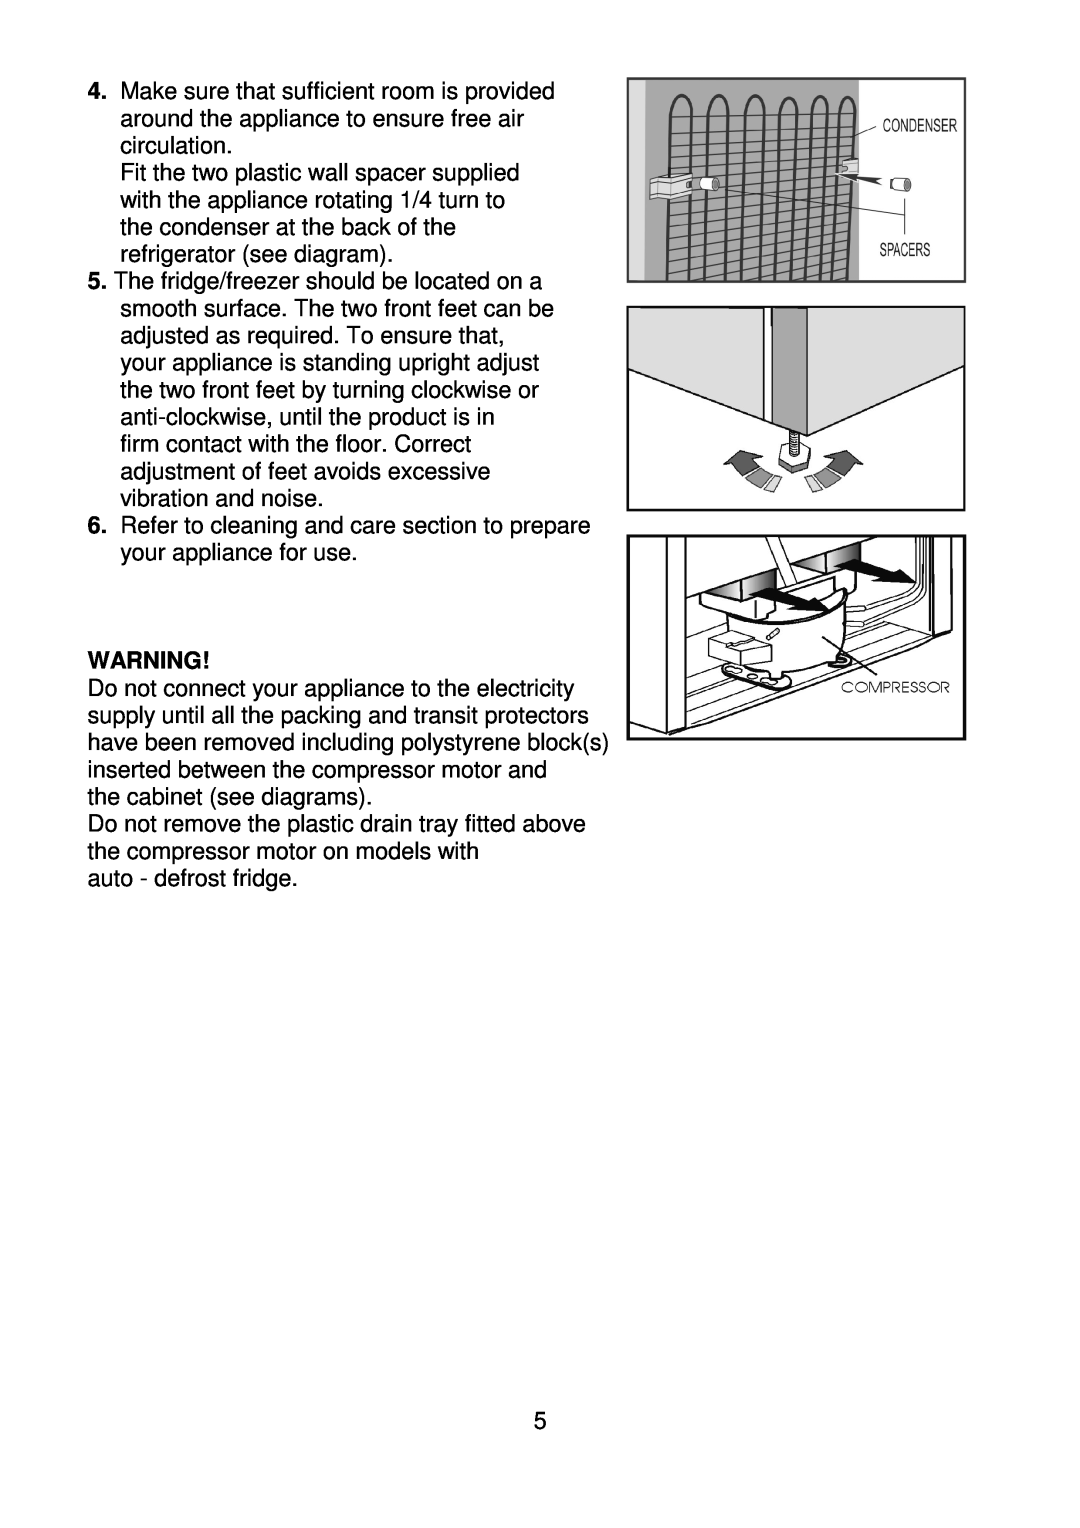 Beko CDA660F installation instructions the cabinet see diagrams, auto - defrost fridge 